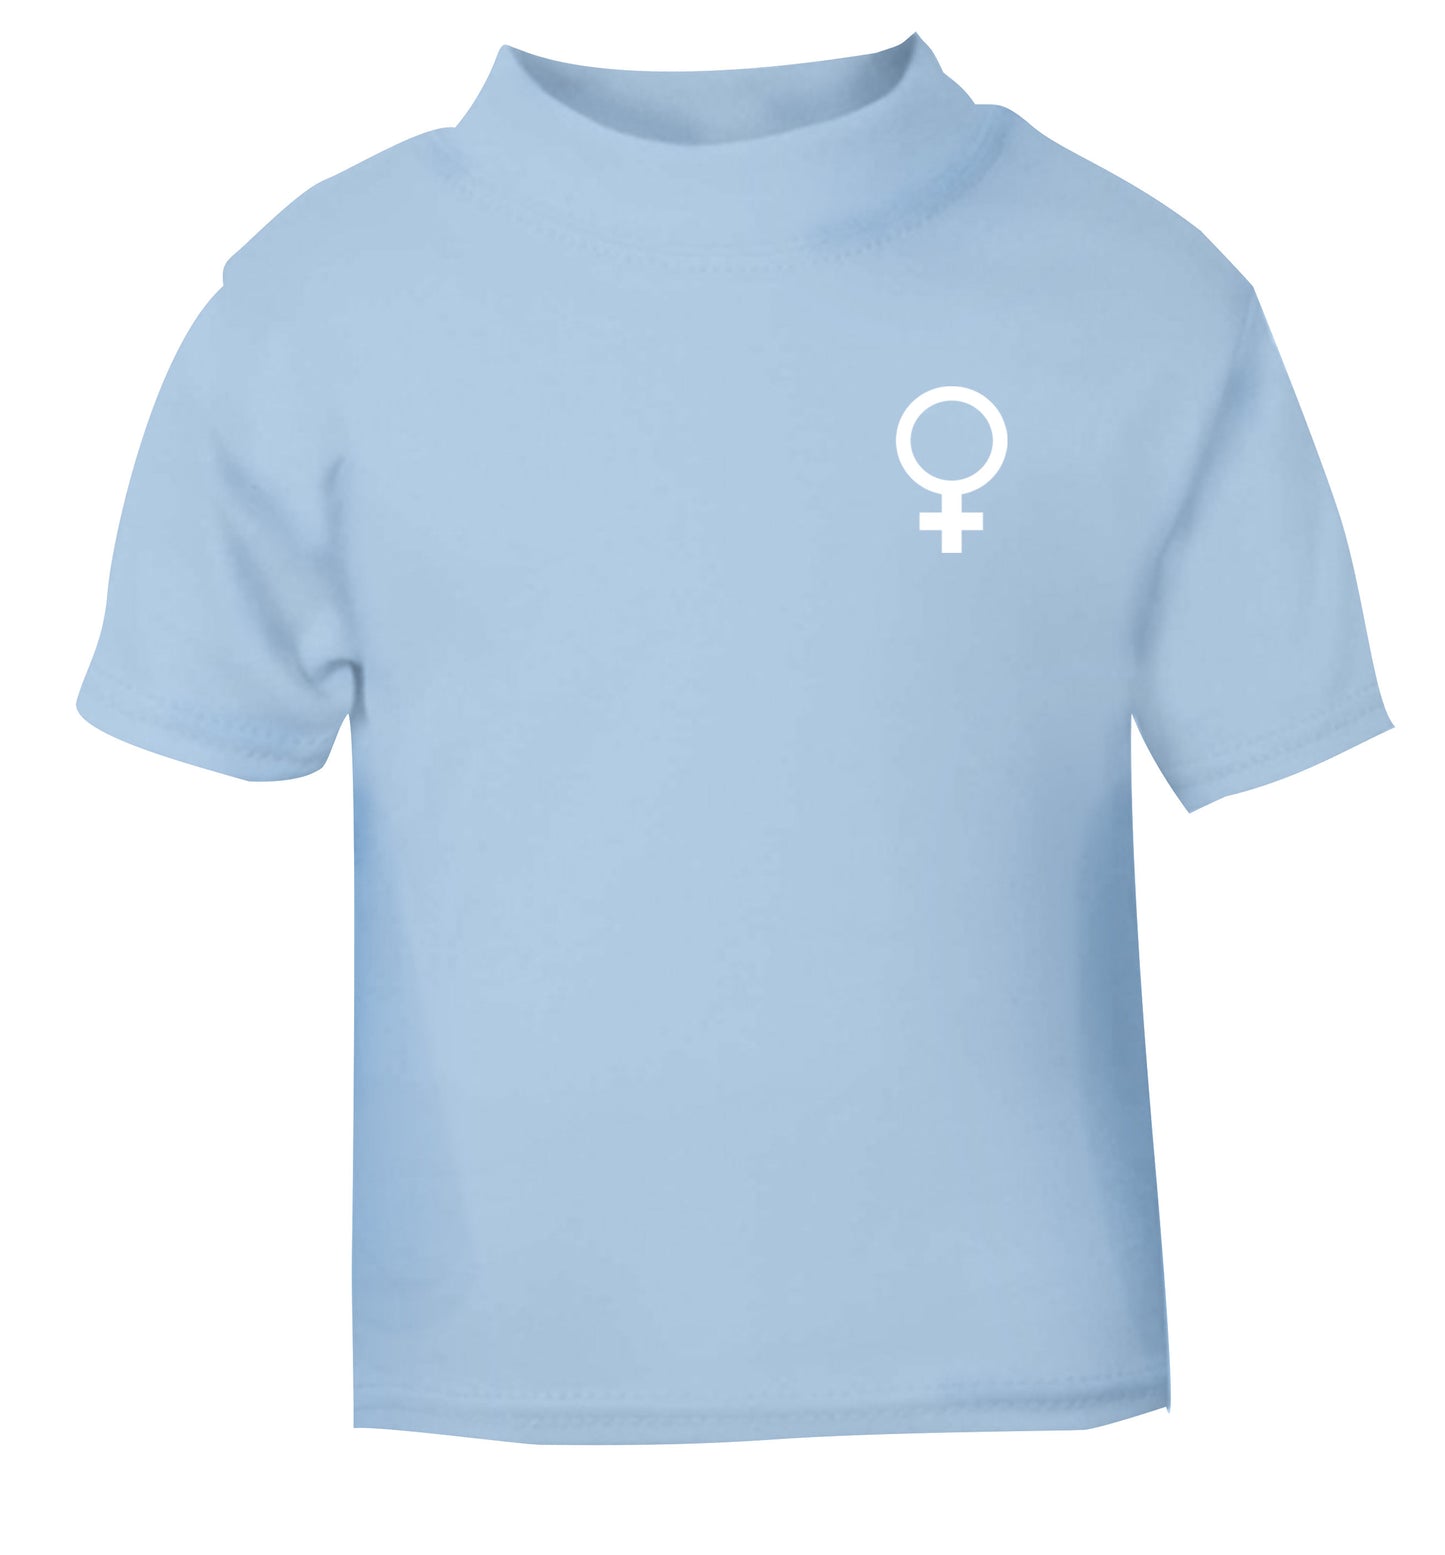 Female pocket symbol light blue Baby Toddler Tshirt 2 Years